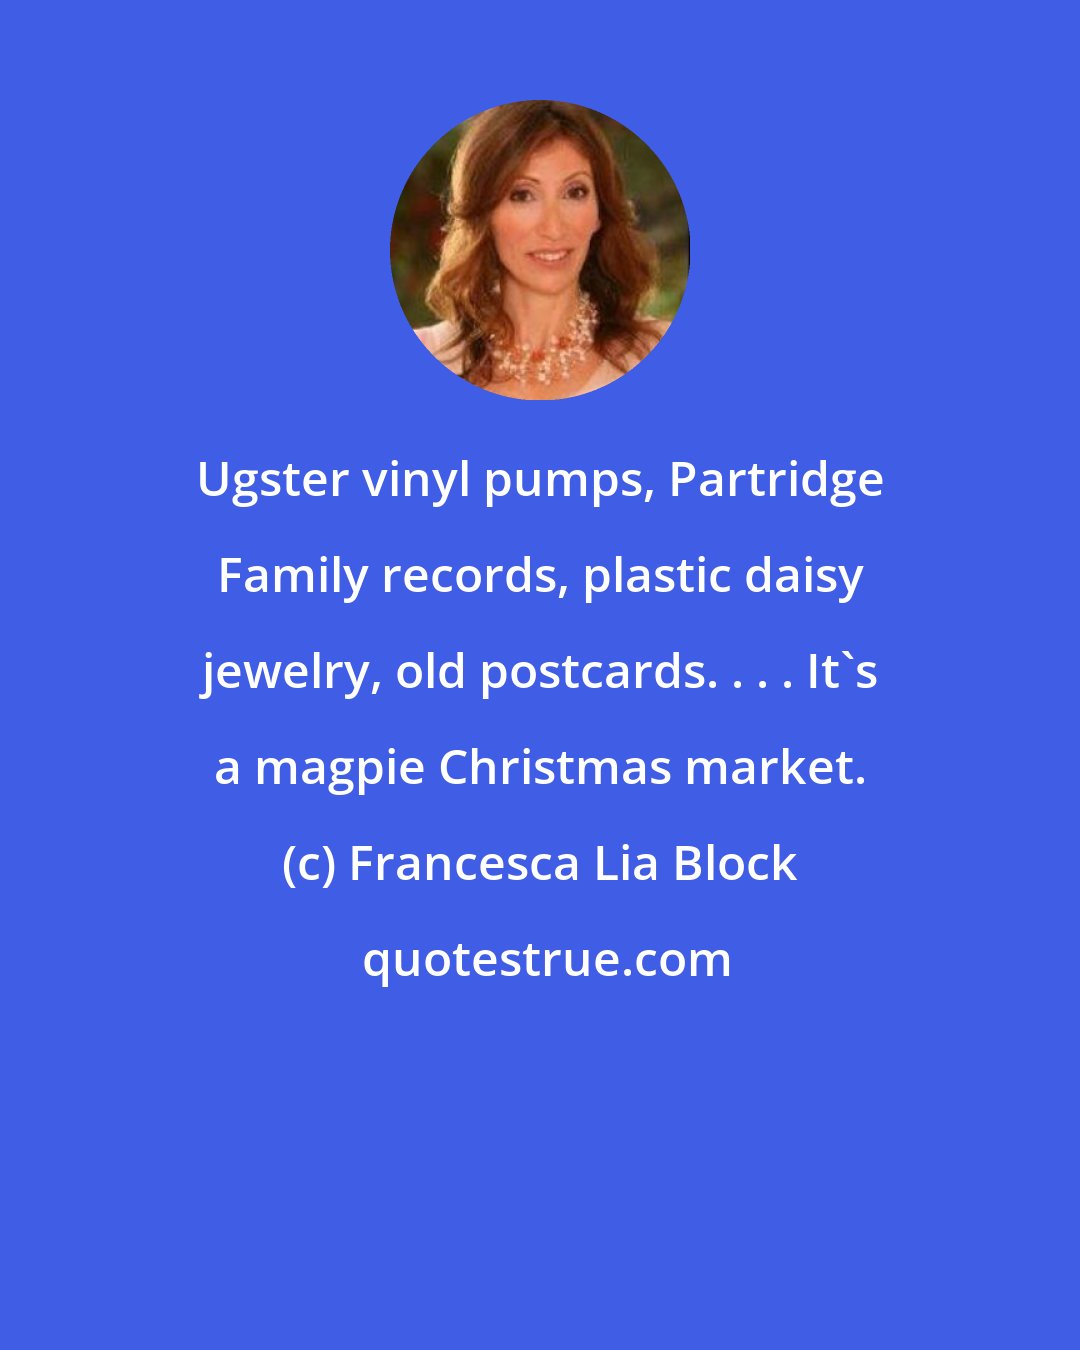 Francesca Lia Block: Ugster vinyl pumps, Partridge Family records, plastic daisy jewelry, old postcards. . . . It's a magpie Christmas market.